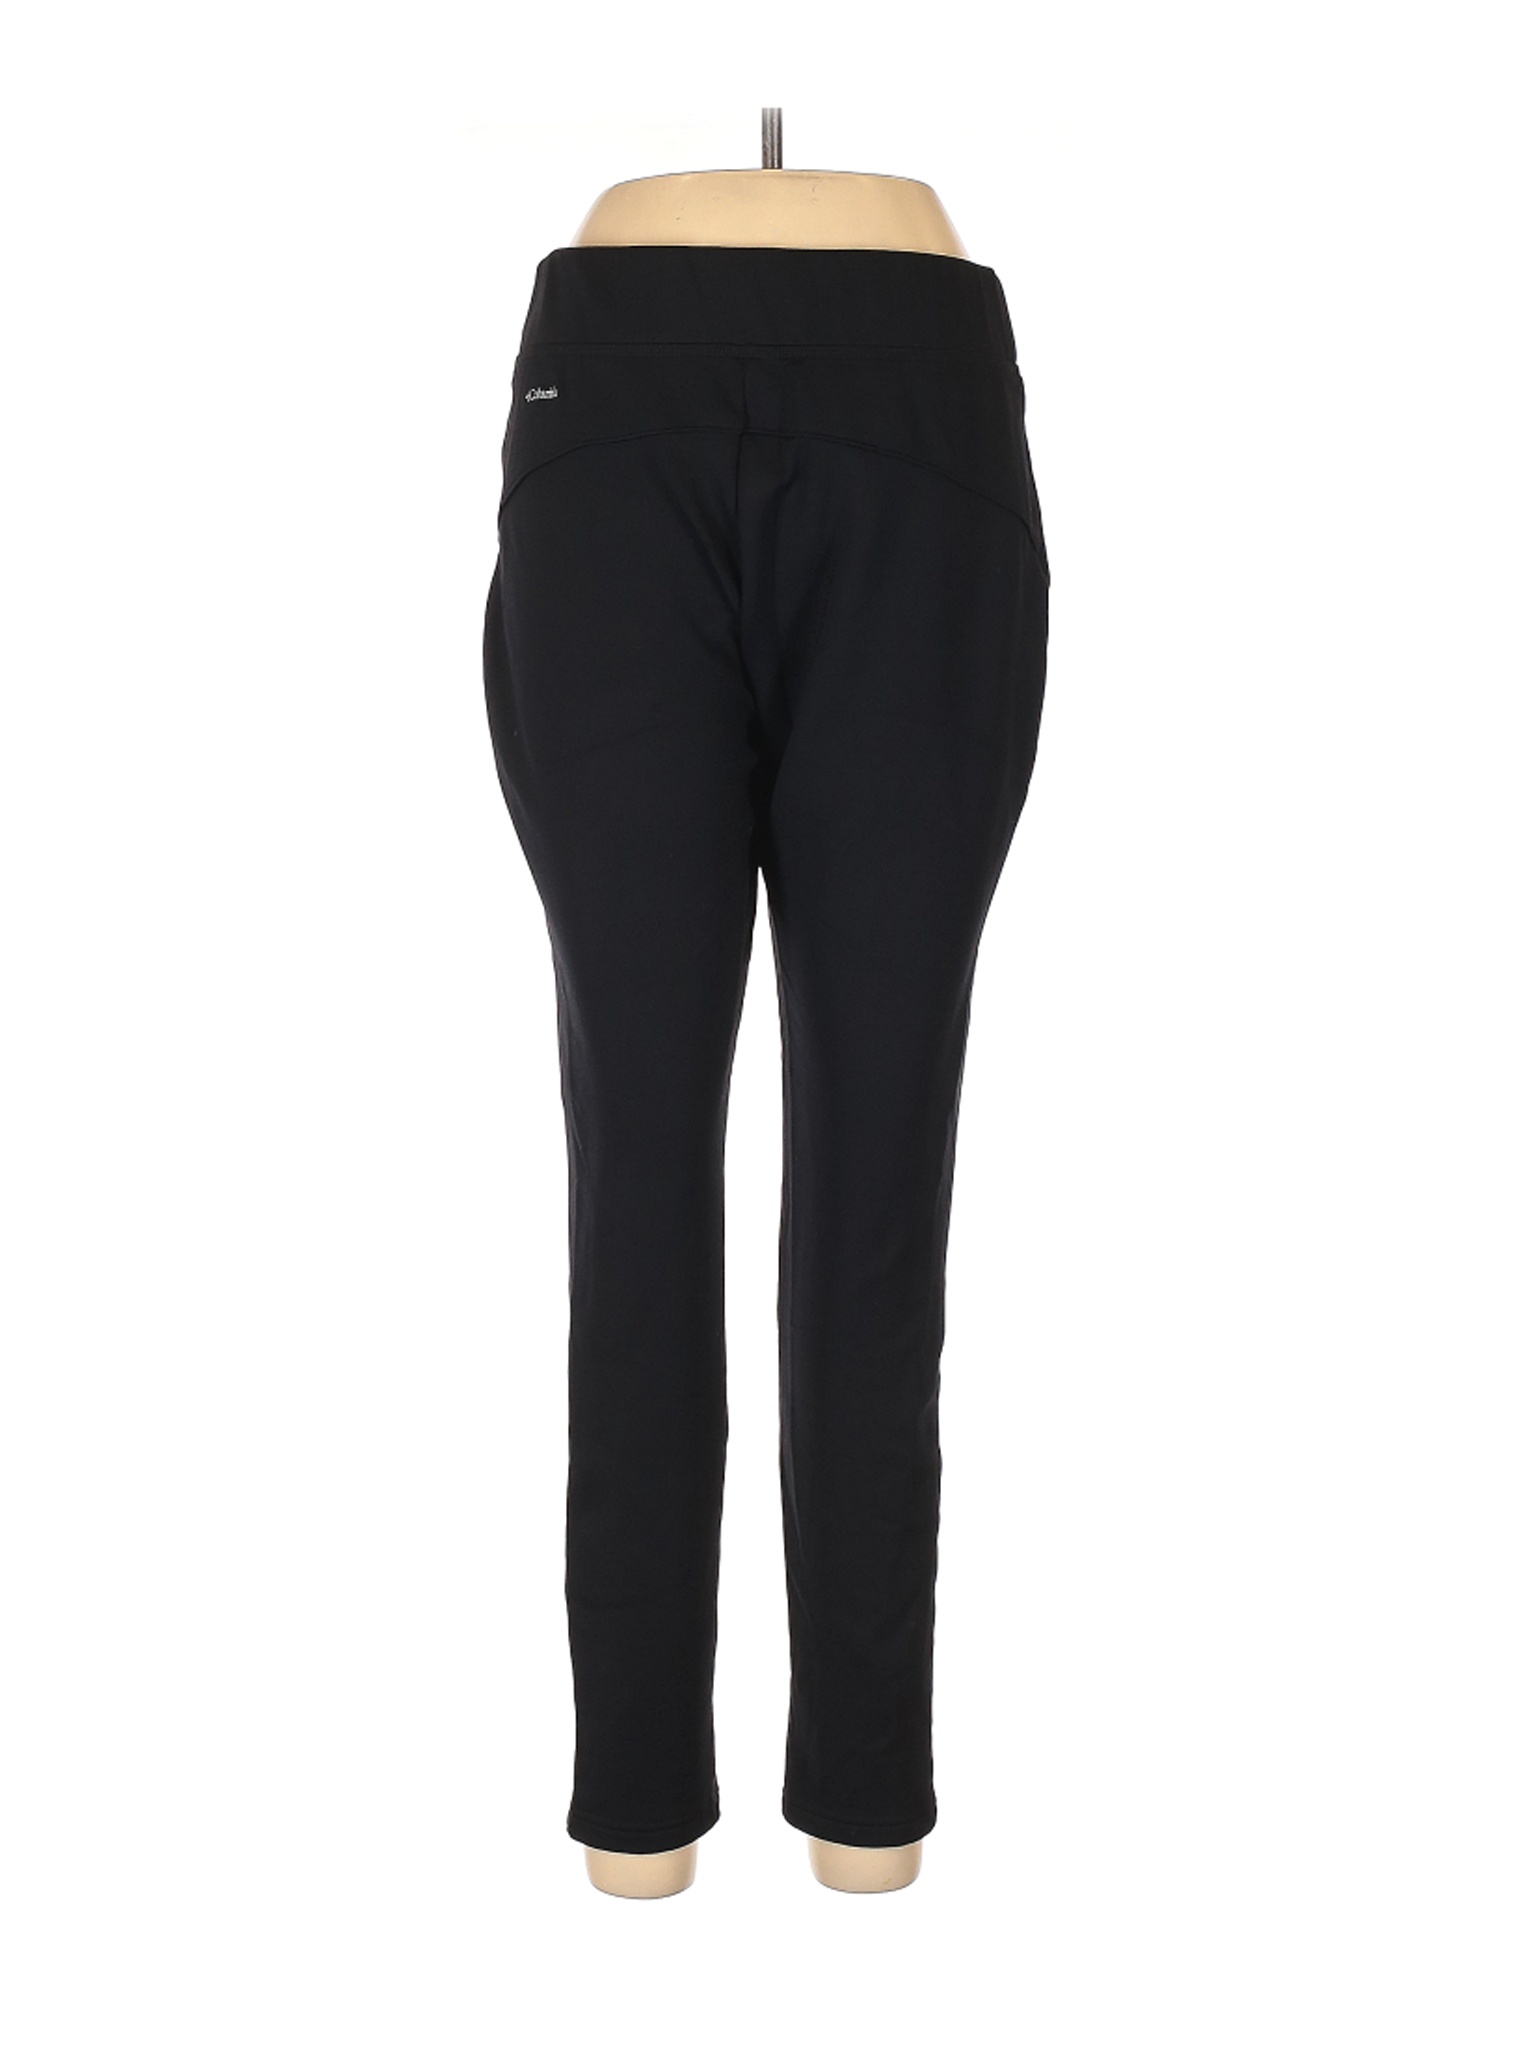 Columbia Women Black Sweatpants L | eBay